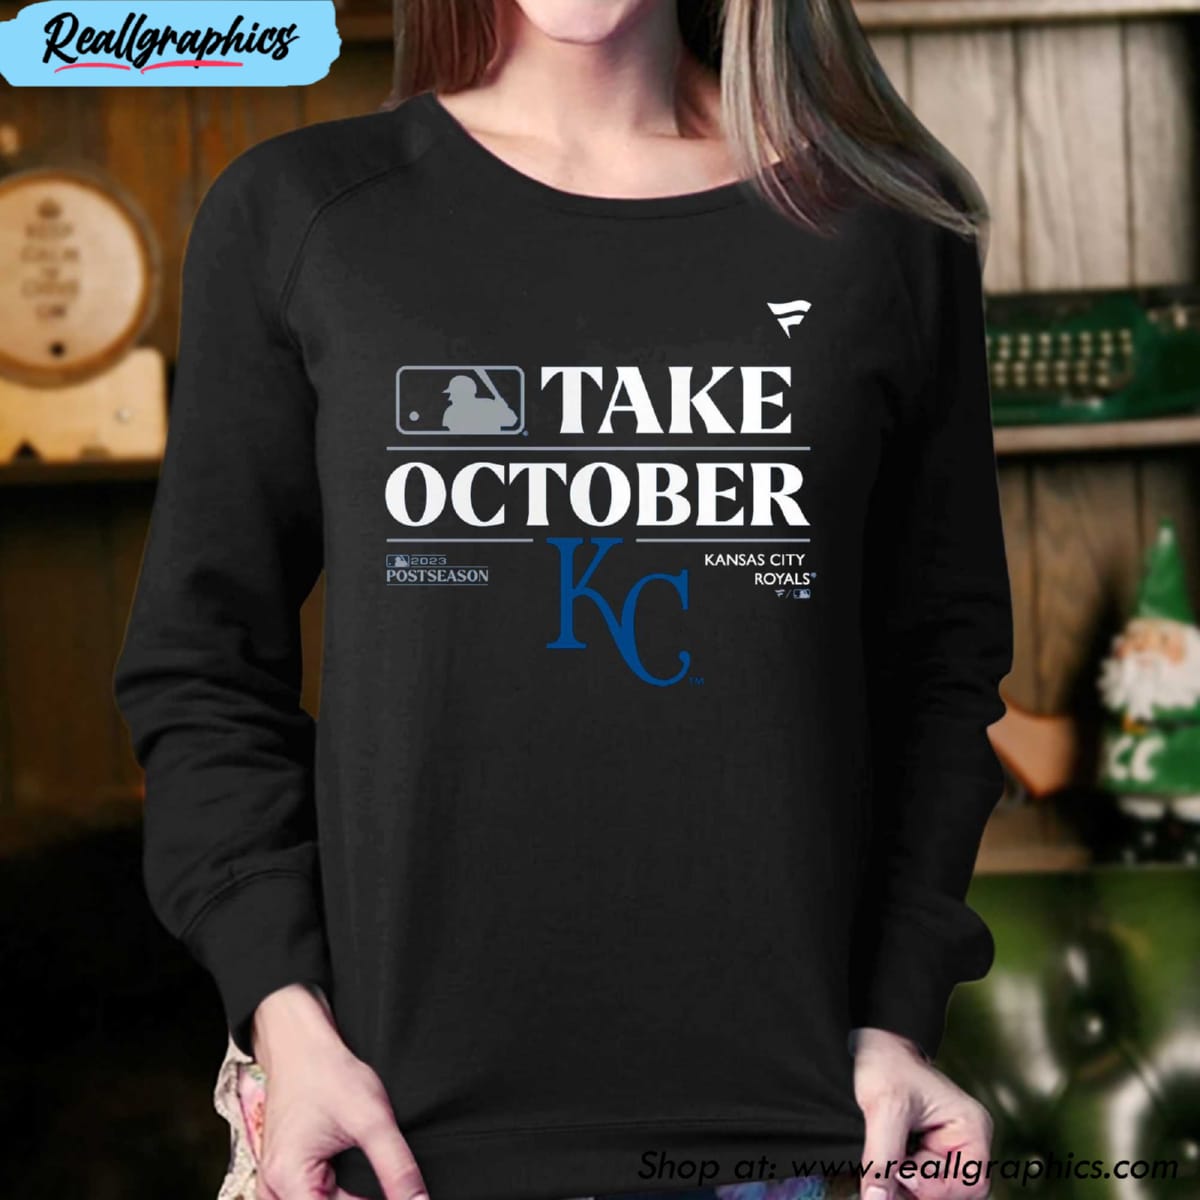 Kansas City Royals Take October Playoffs Postseason 2023 Unisex T-shirt,  Hoodie, Sweatshirt - Reallgraphics